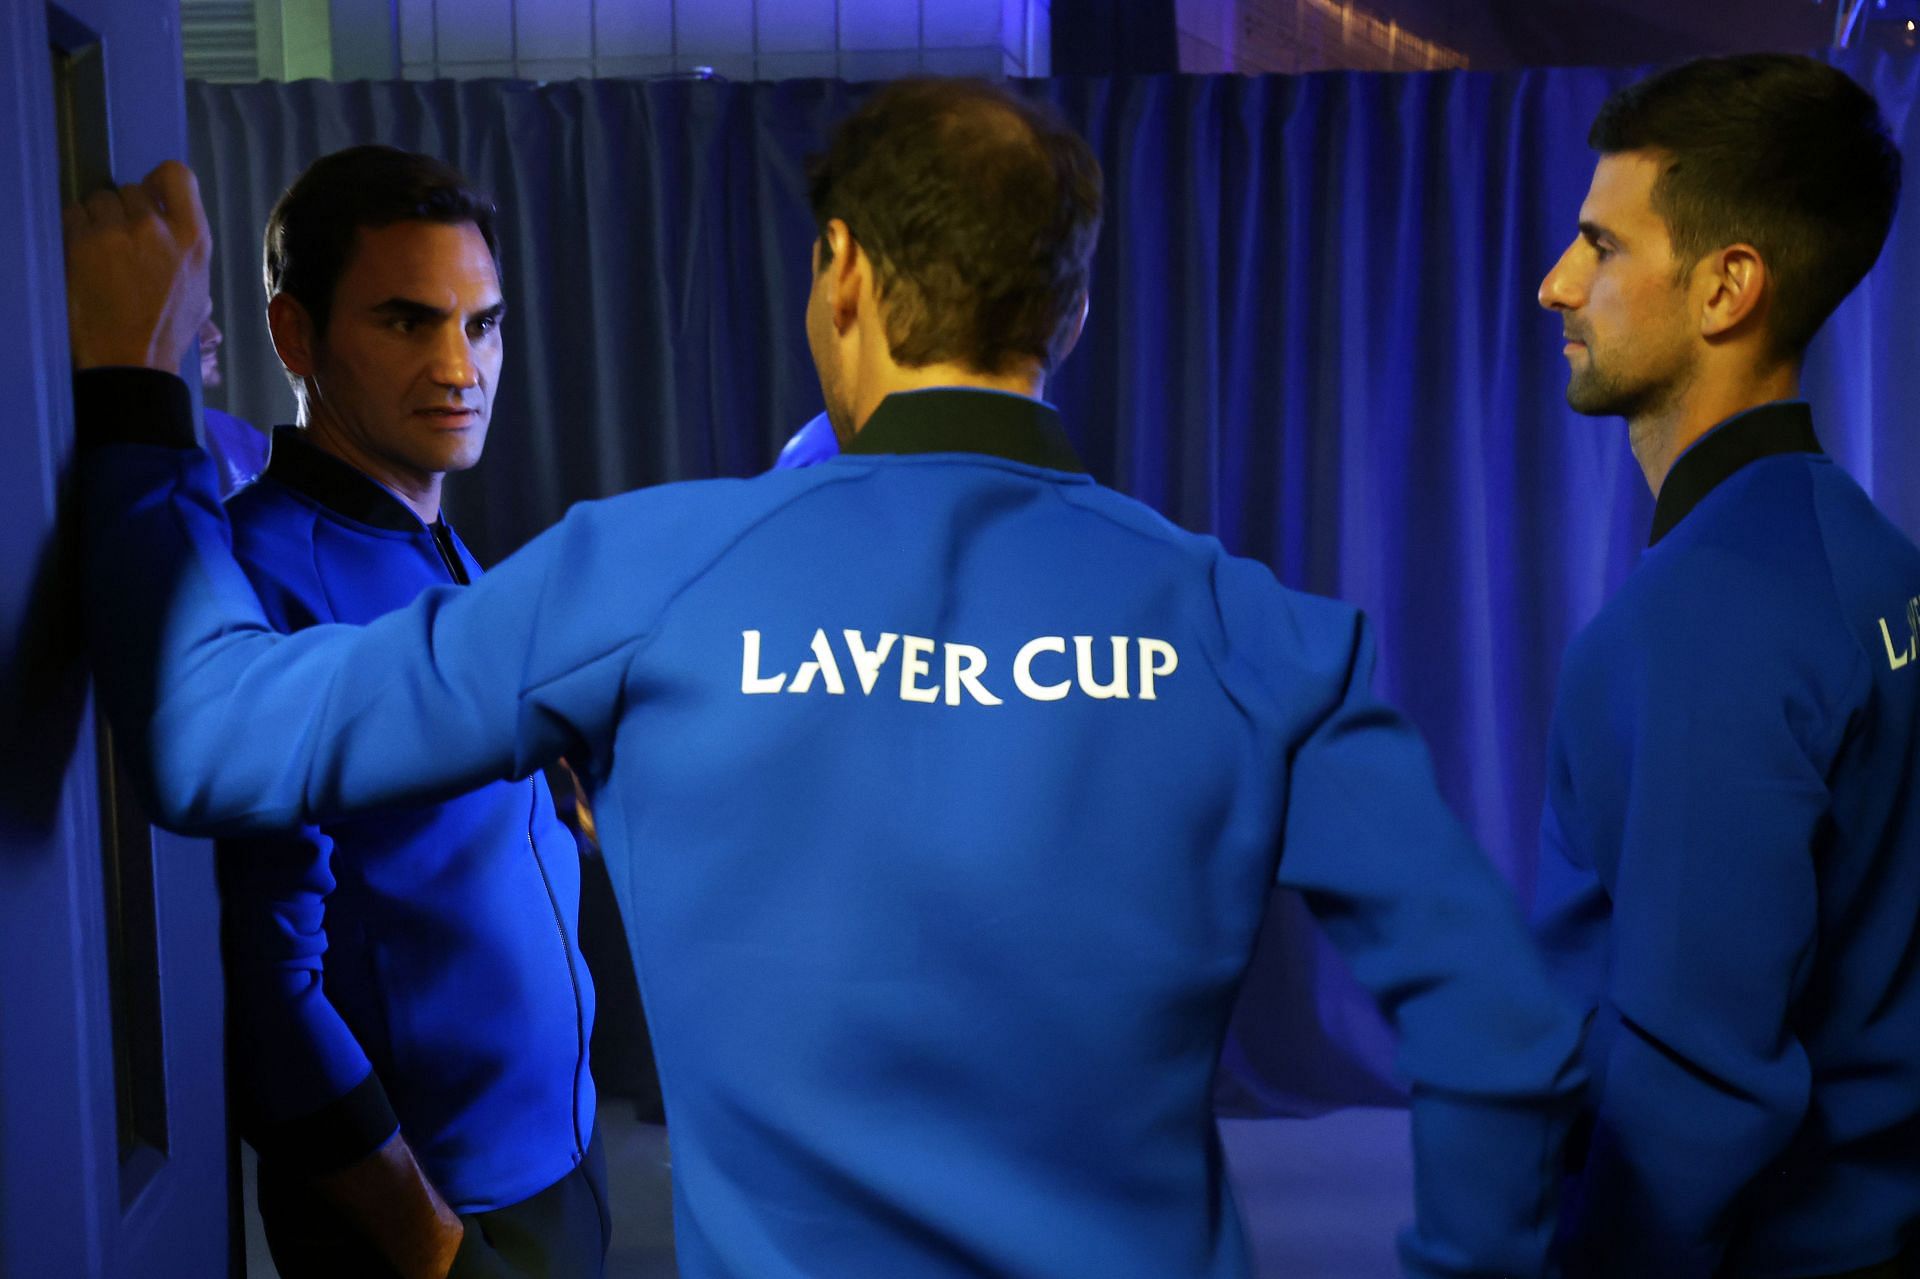 Roger Federer, Rafael Nadal, and Novak Djokovic at Laver Cup 2022